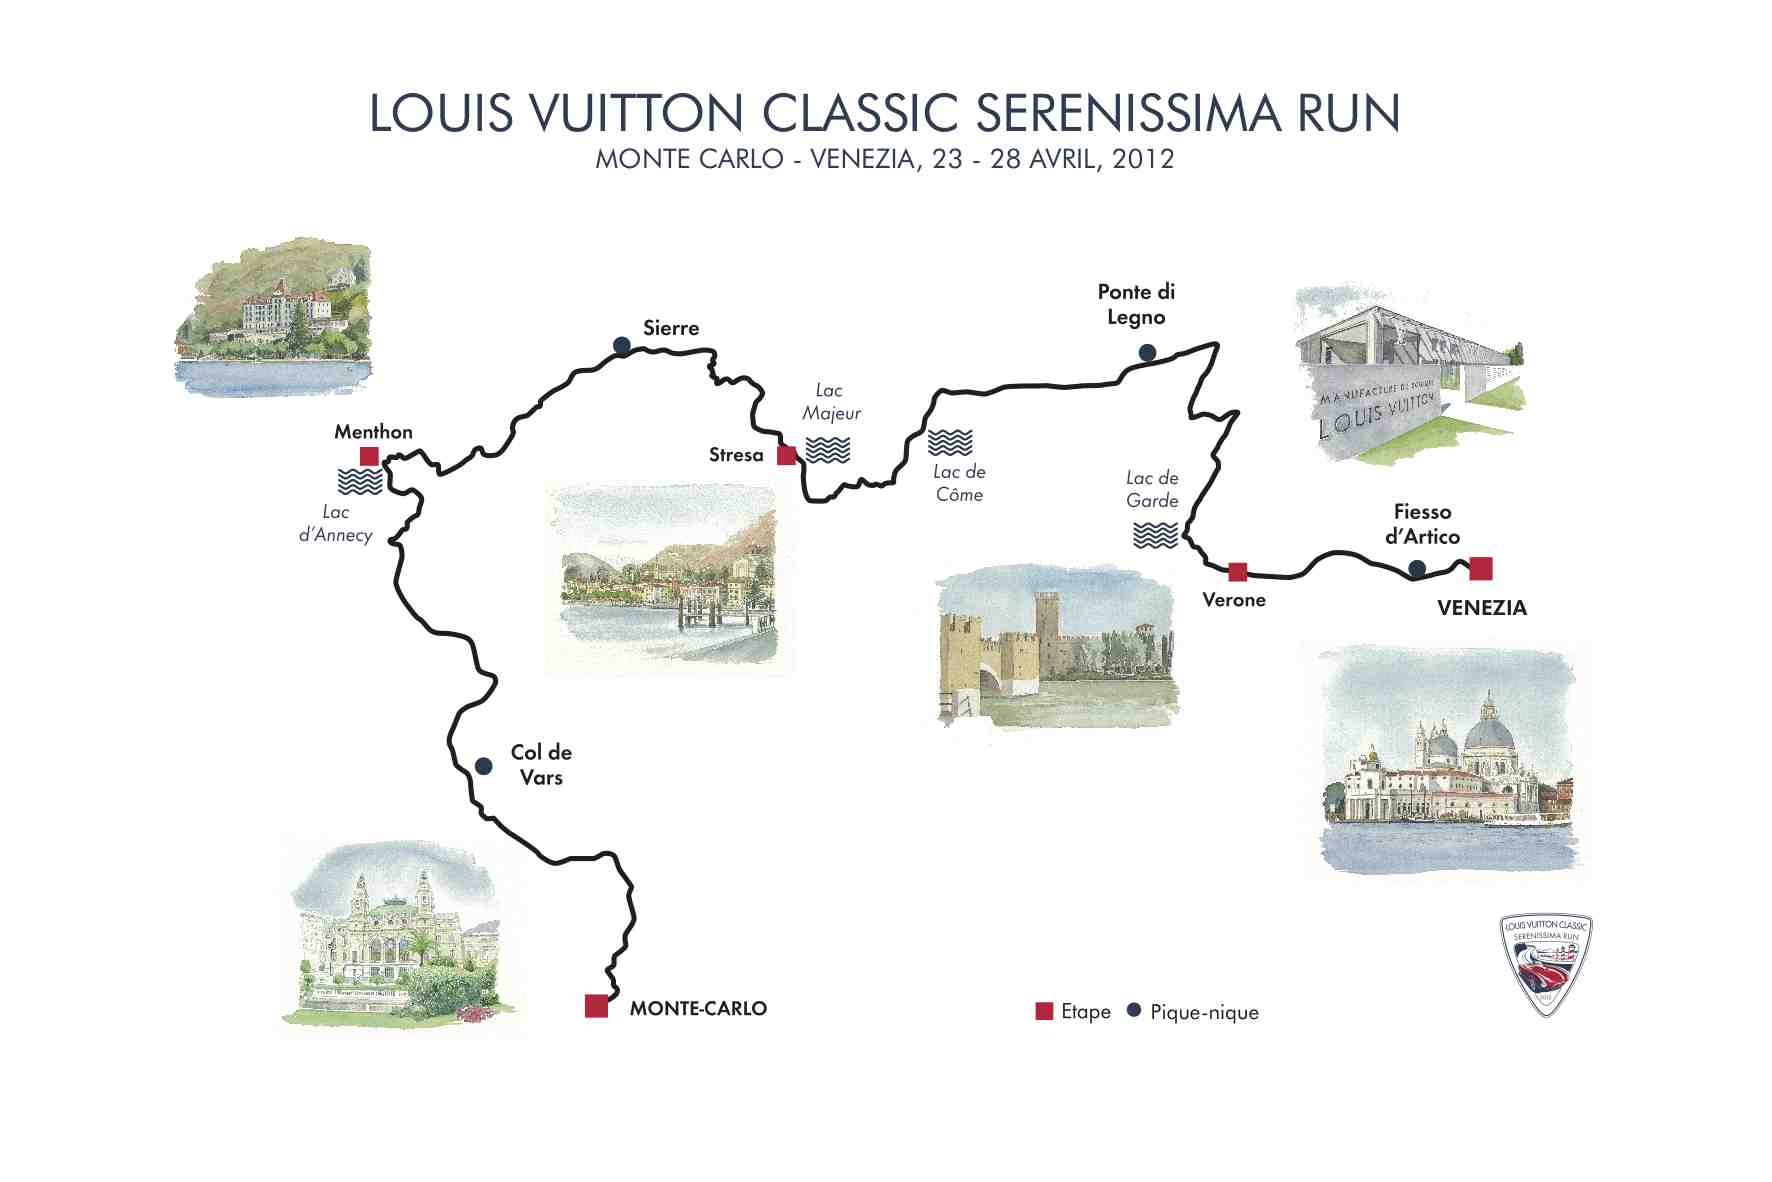 Louis Vuitton Classic Serenissima Run, April 24, 2012 